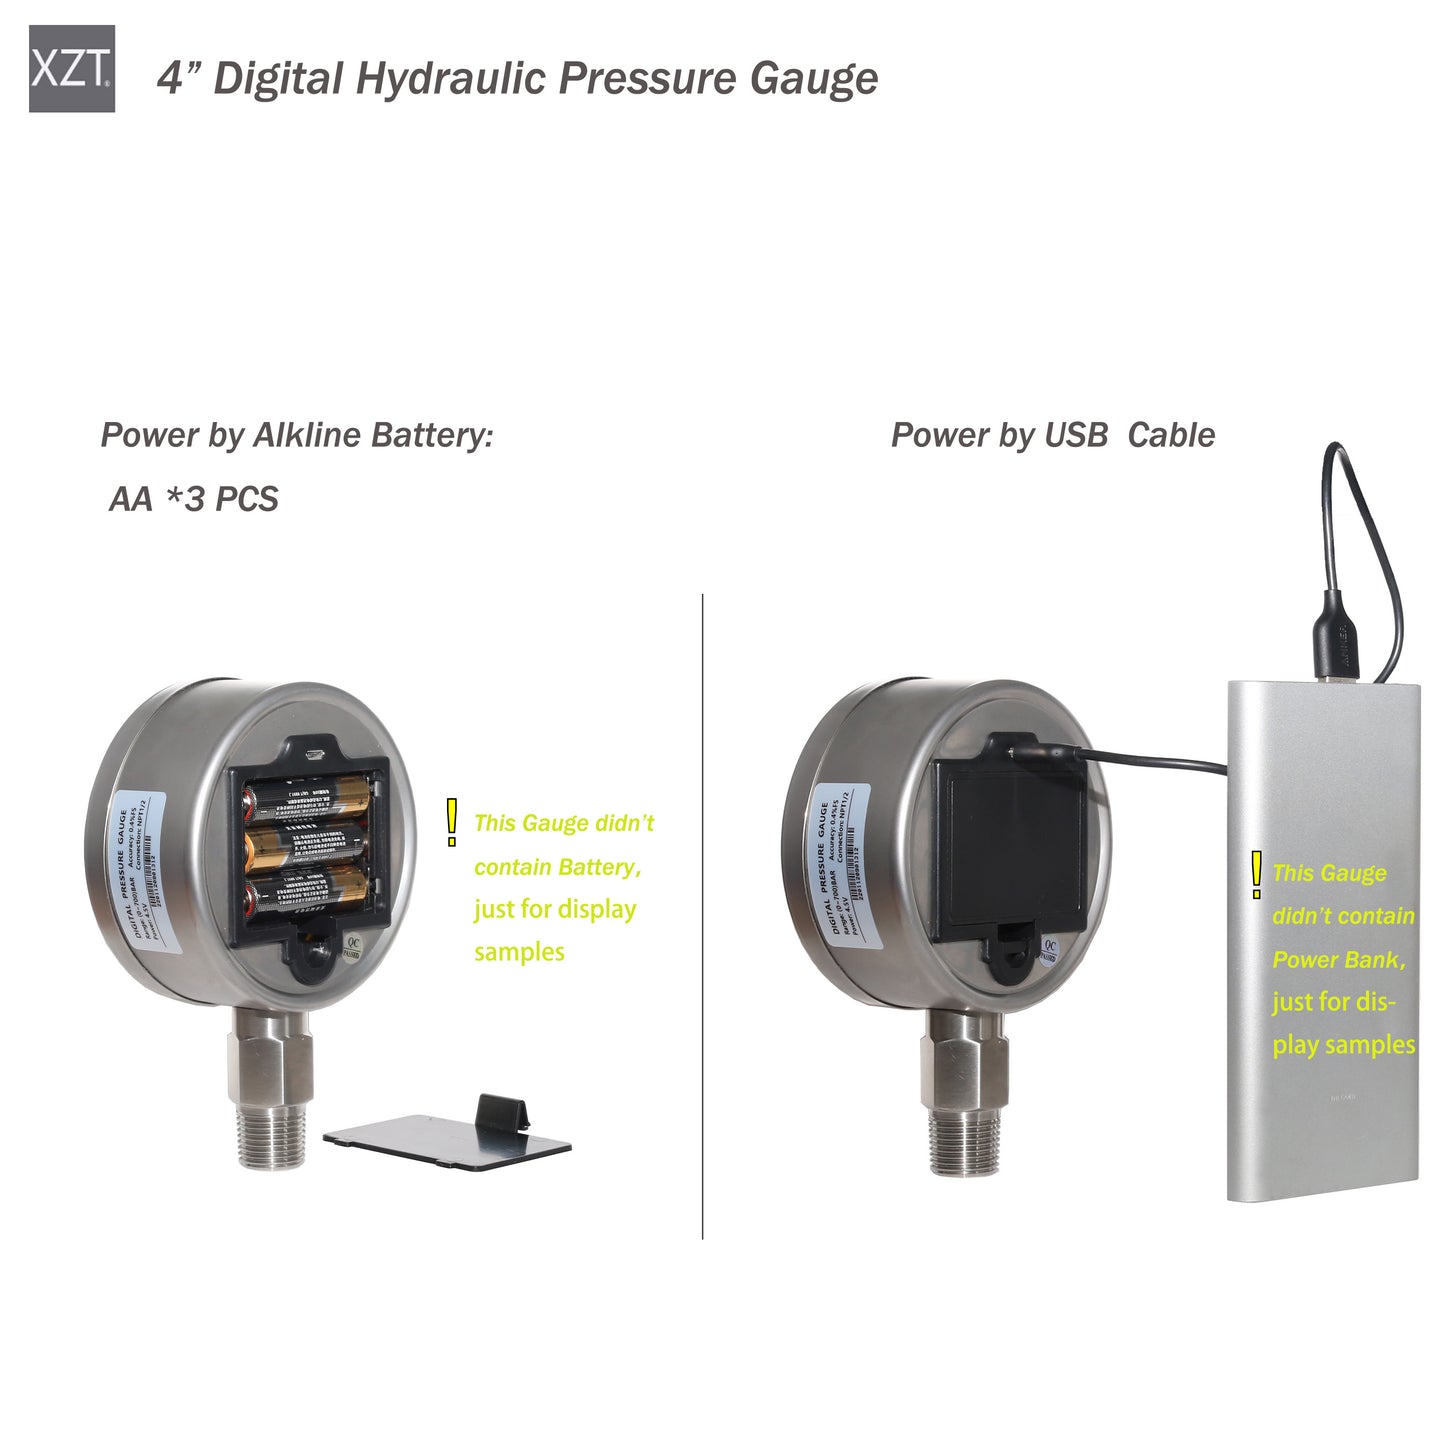 XZT 4" 0~700BAR/10000 PSI Digital Hydraulic Pressure Gauge with Black Protector,Pressure Manometer, Pressure Sensor Connector ,Base Entry